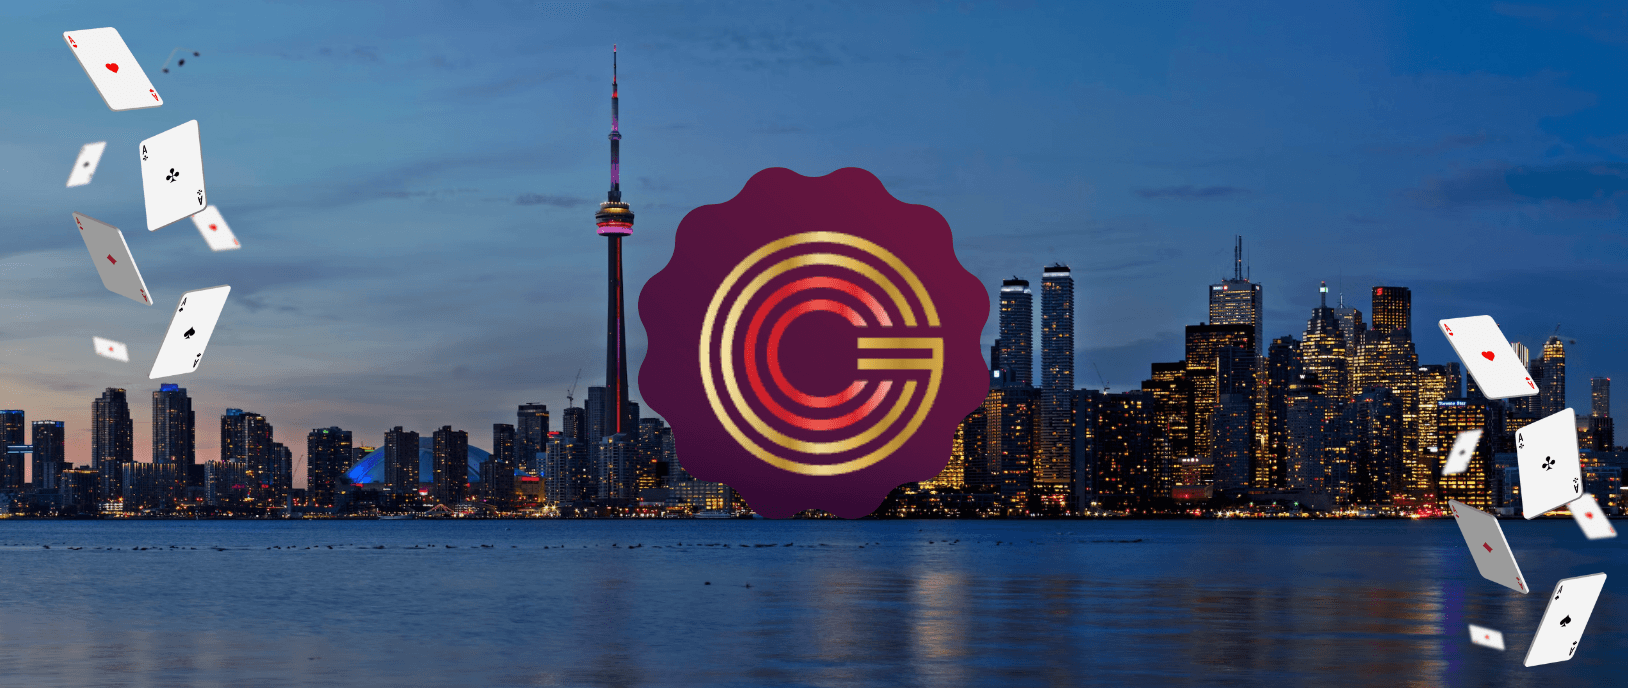 New Resort Alert: Great Canadian Casino Resort Coming To Toronto in Summer